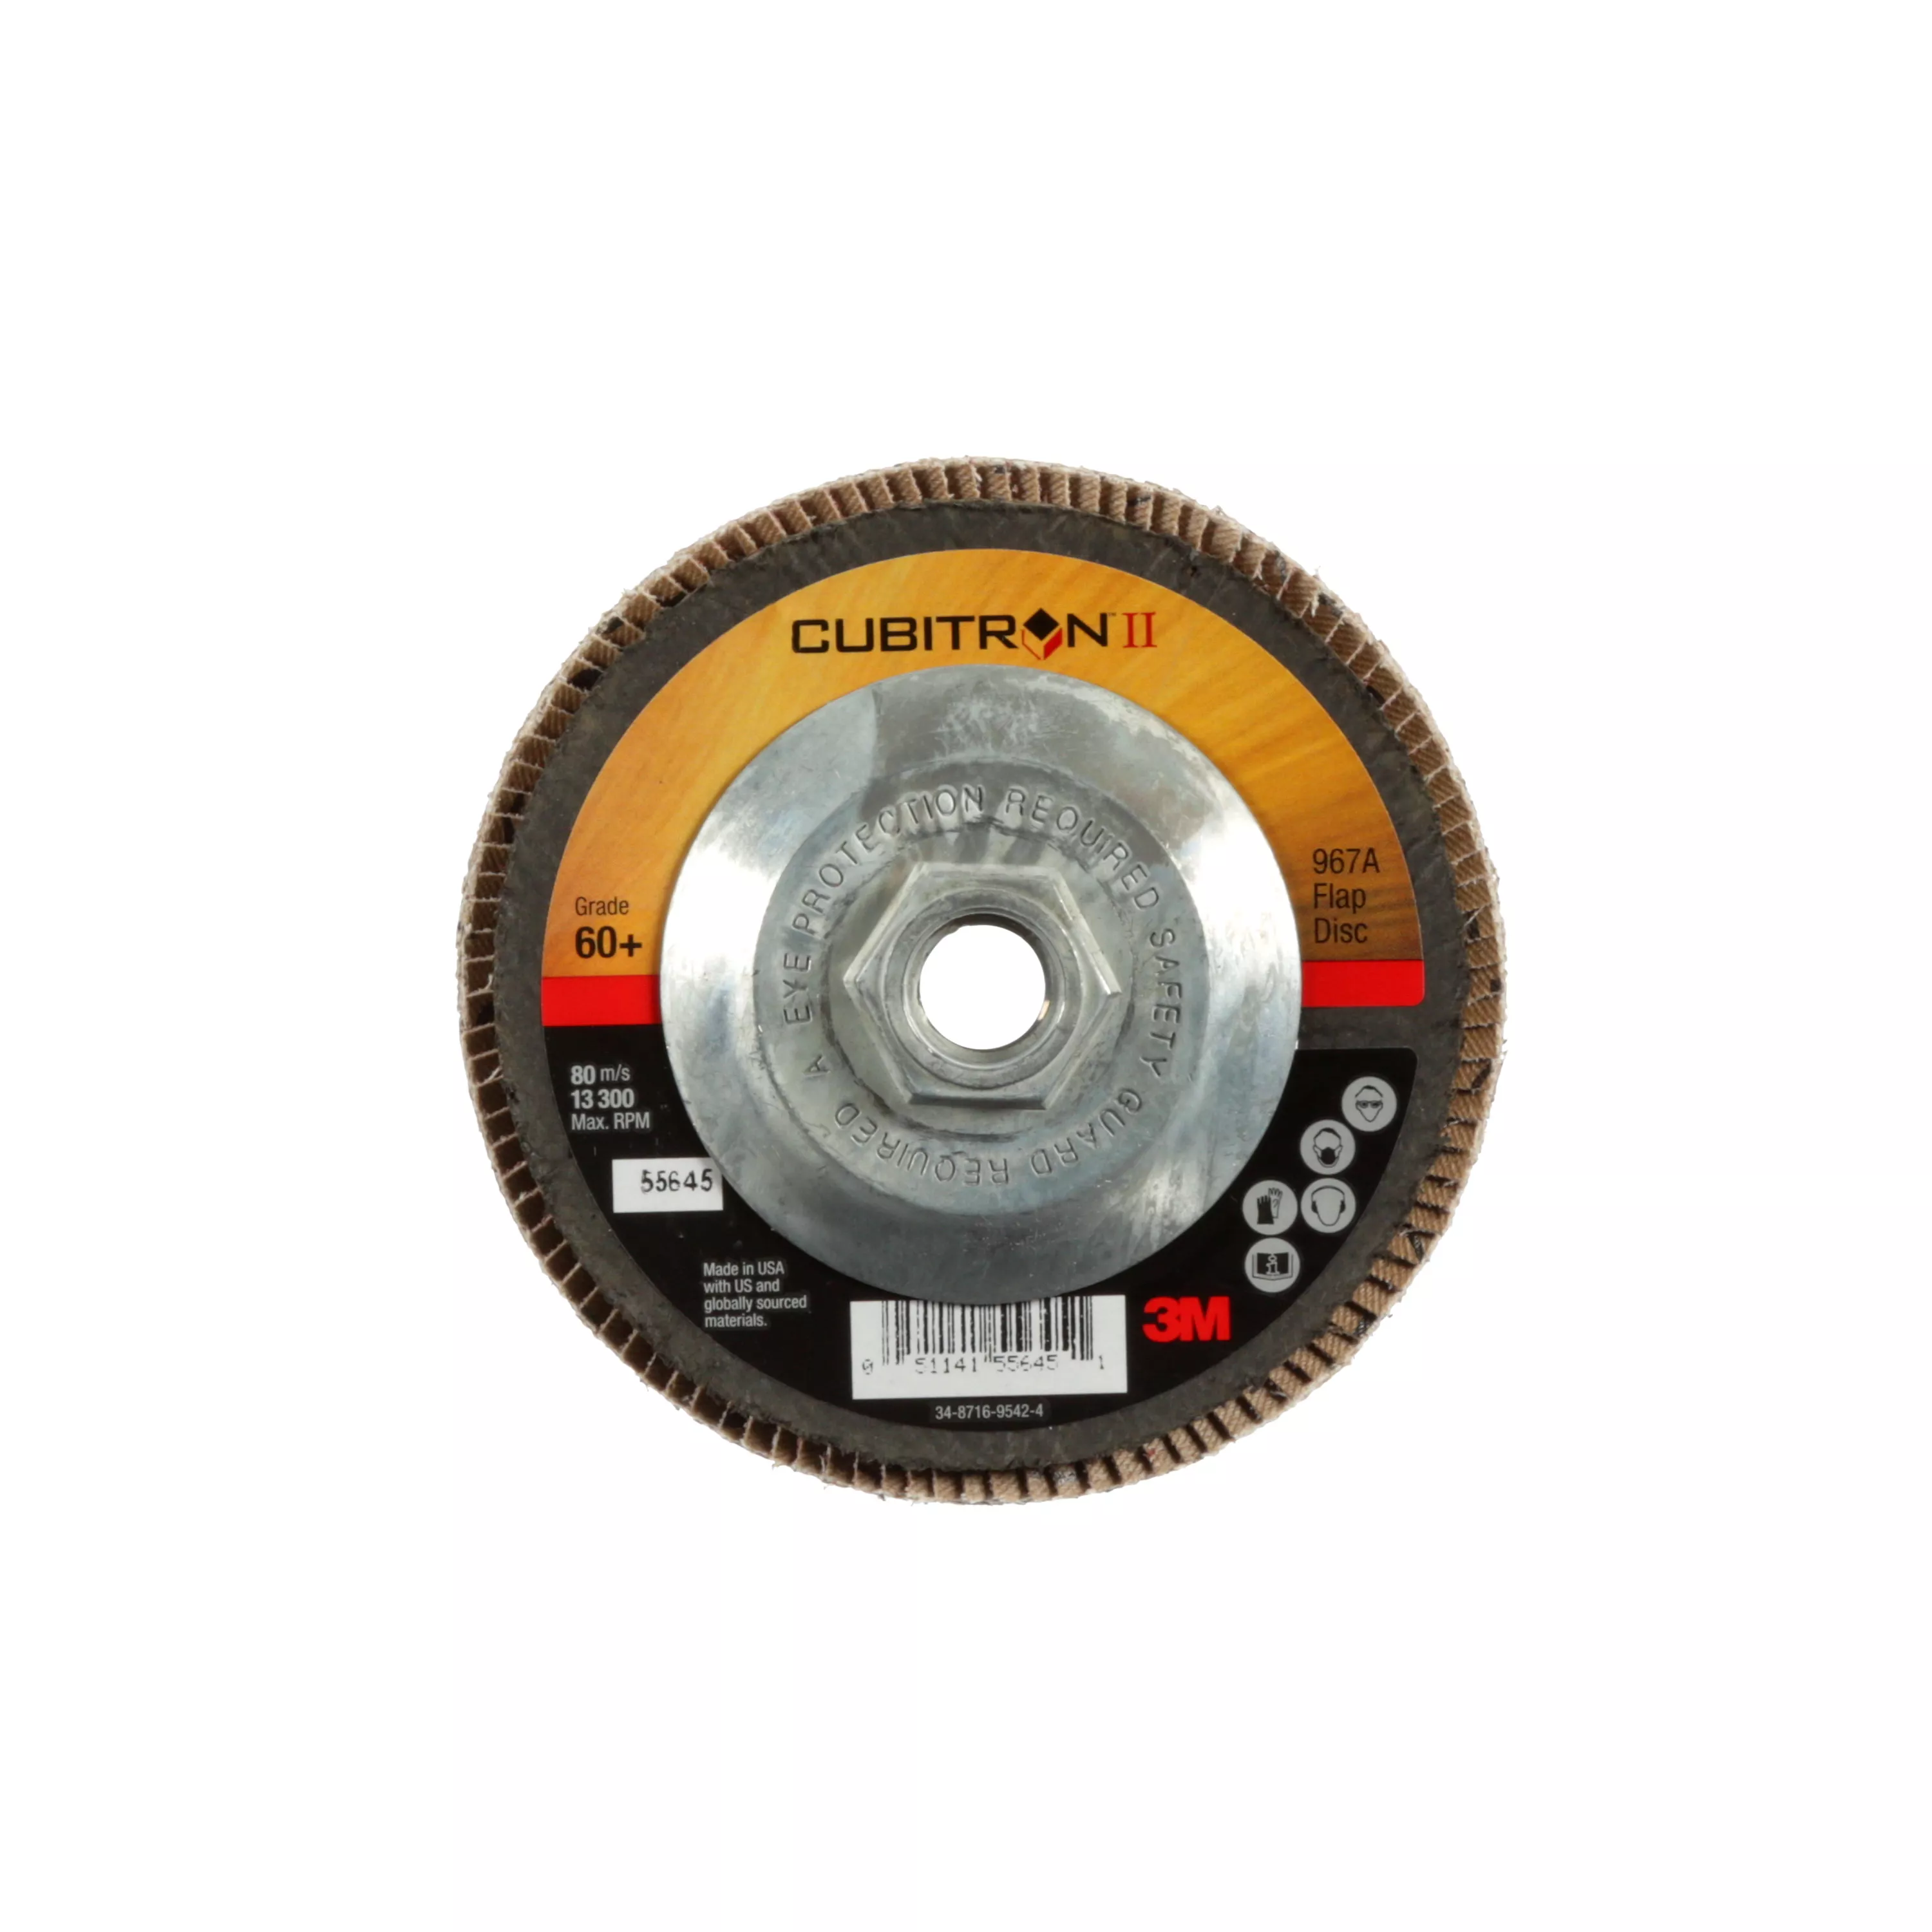 SKU 7010308947 | 3M™ Cubitron™ II Flap Disc 967A